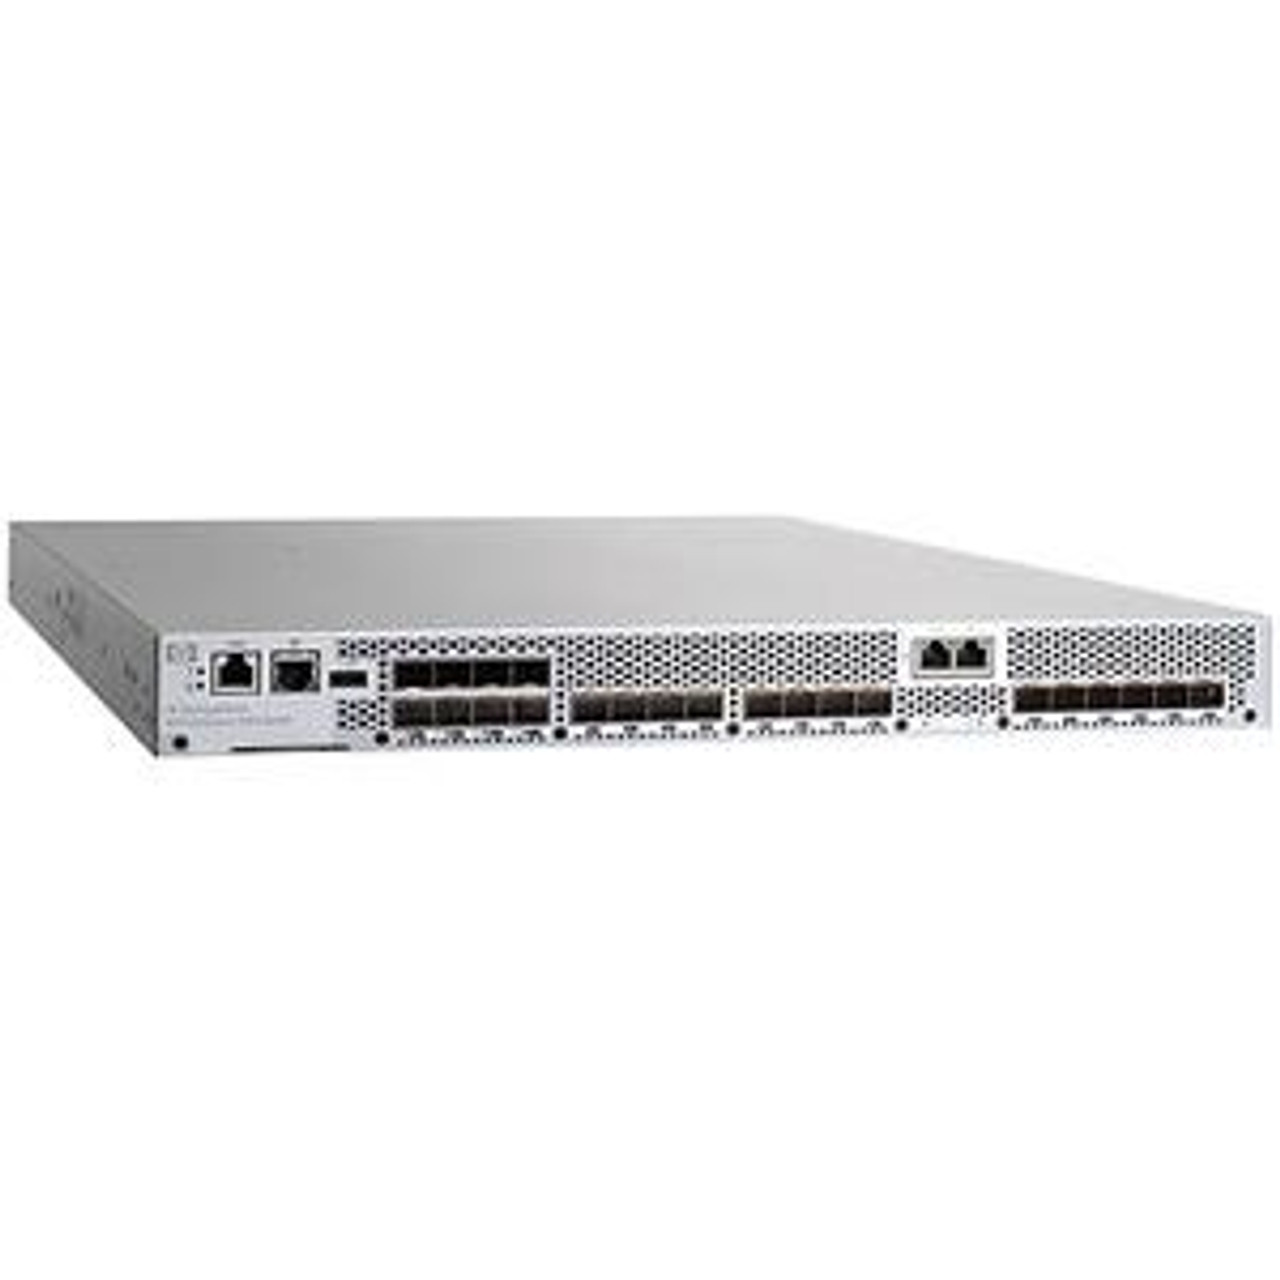 AP864A HP 1606 Fcip 22-Ports 8Gbps SFP+ Fibre Channel 10/100/1000 Base-T Rack-mountable 1U Gigabit Ethernet Switch (Refurbished)